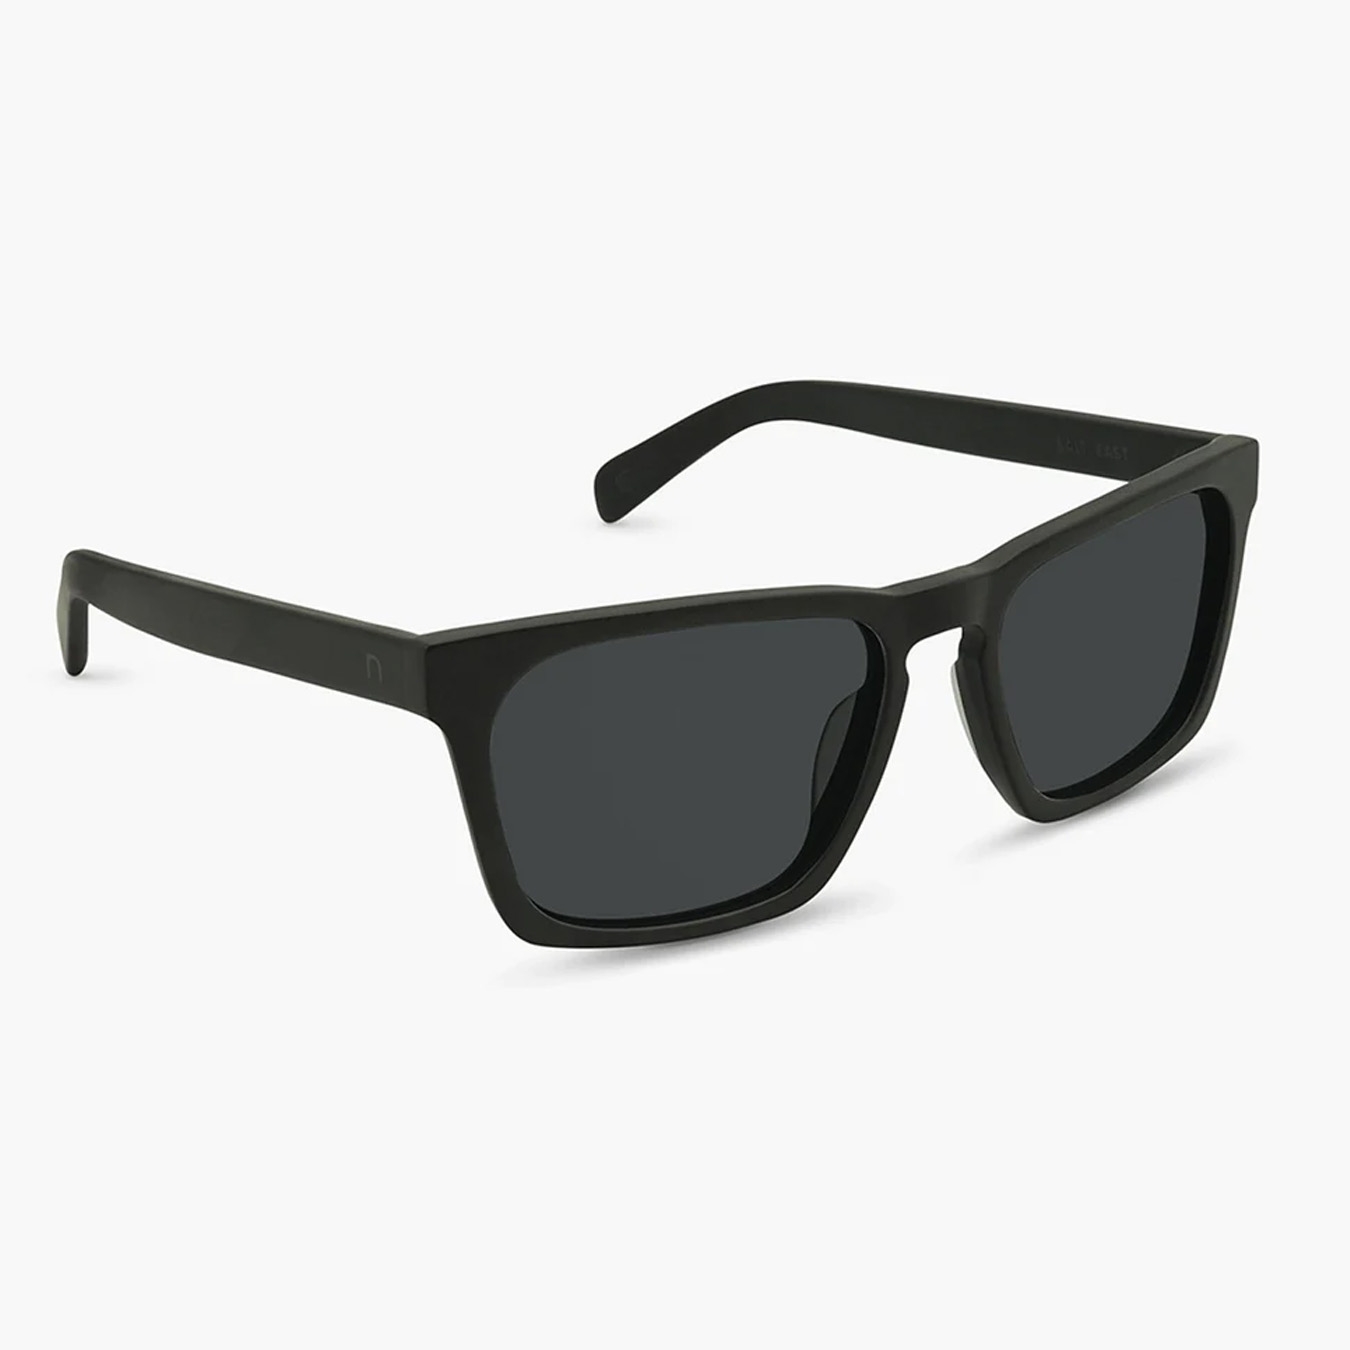 Bear Mountain Polarized Sunglasses